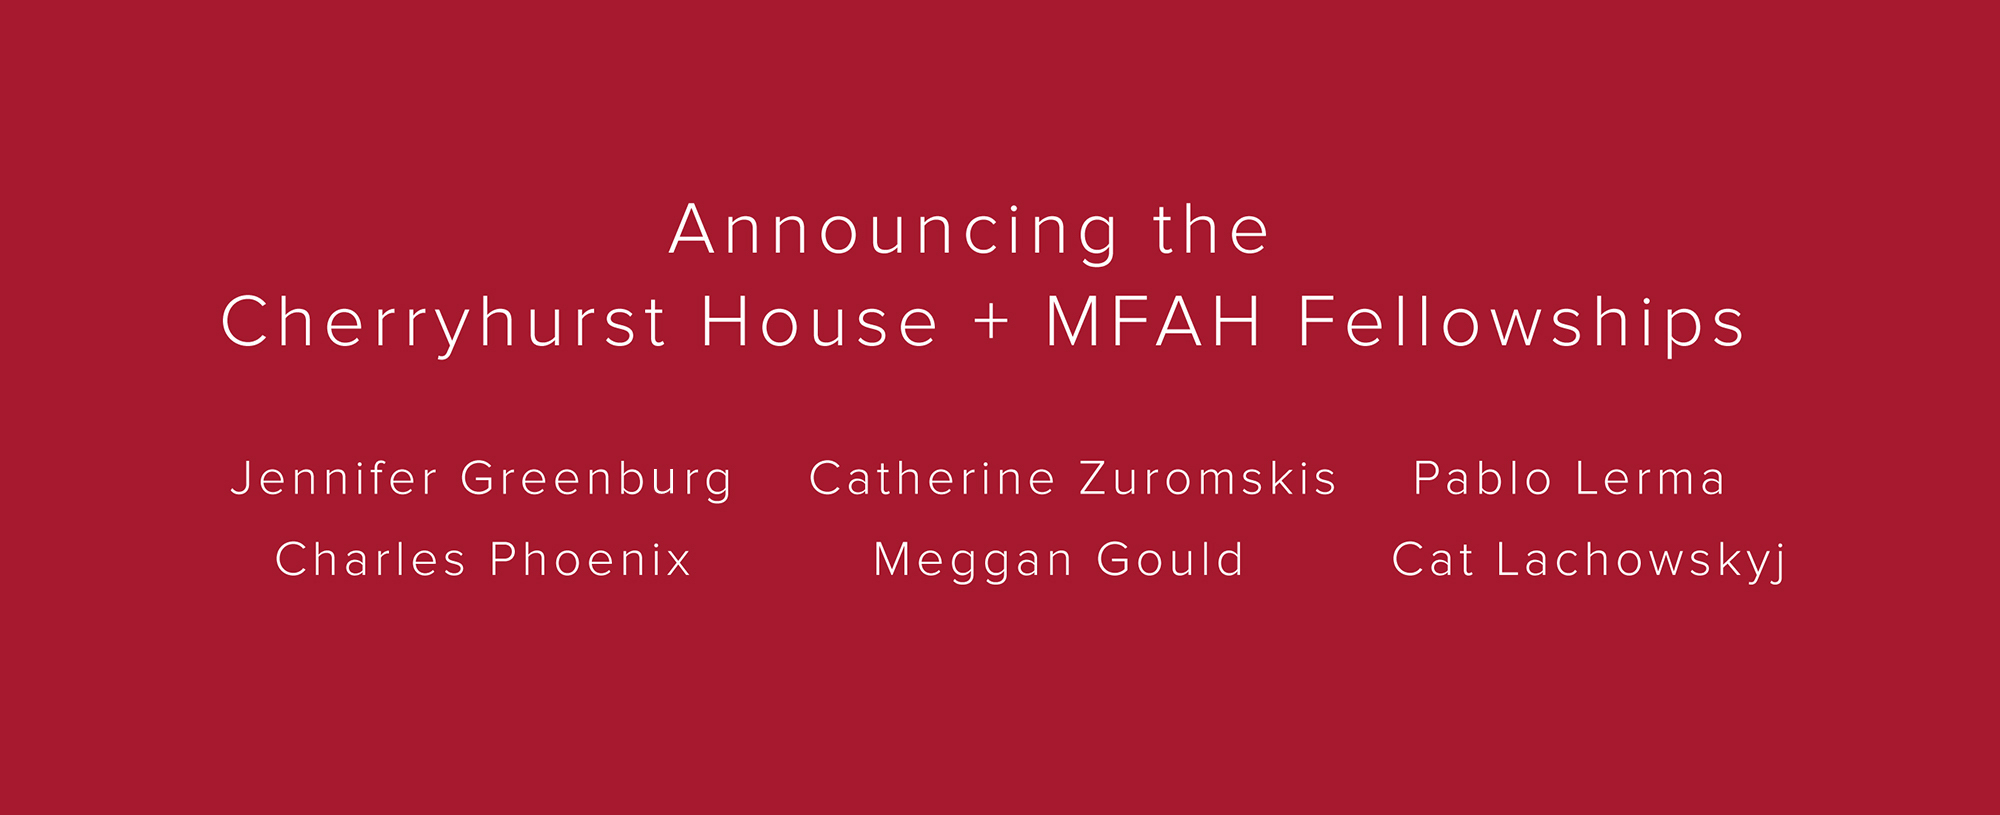 Cherryhurst House Fellowship at the MFAH